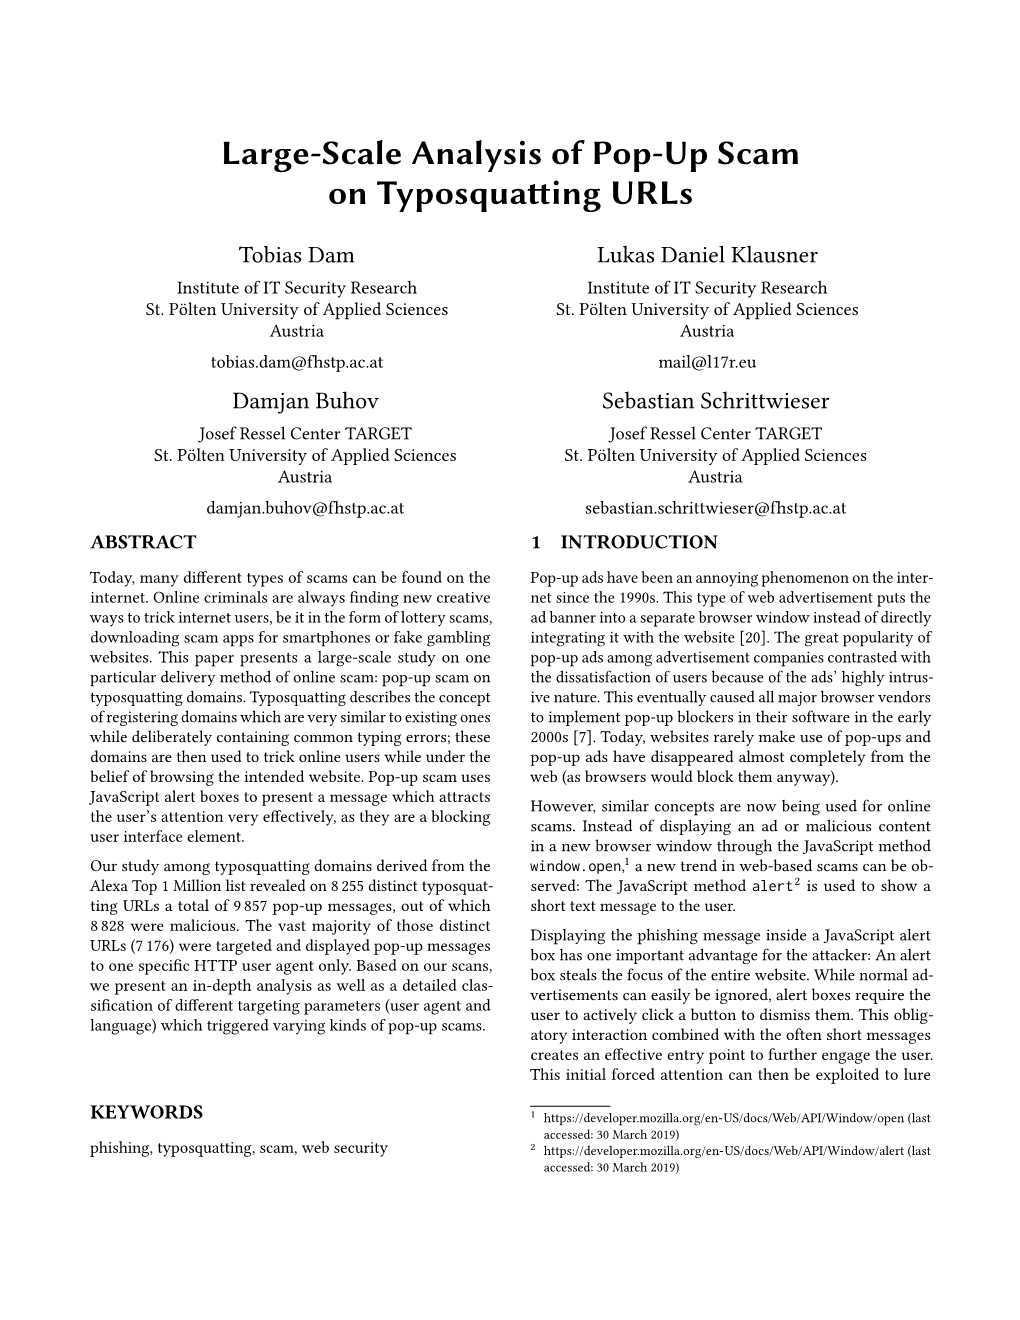 Large-Scale Analysis of Pop-Up Scam on Typosquatting Urls